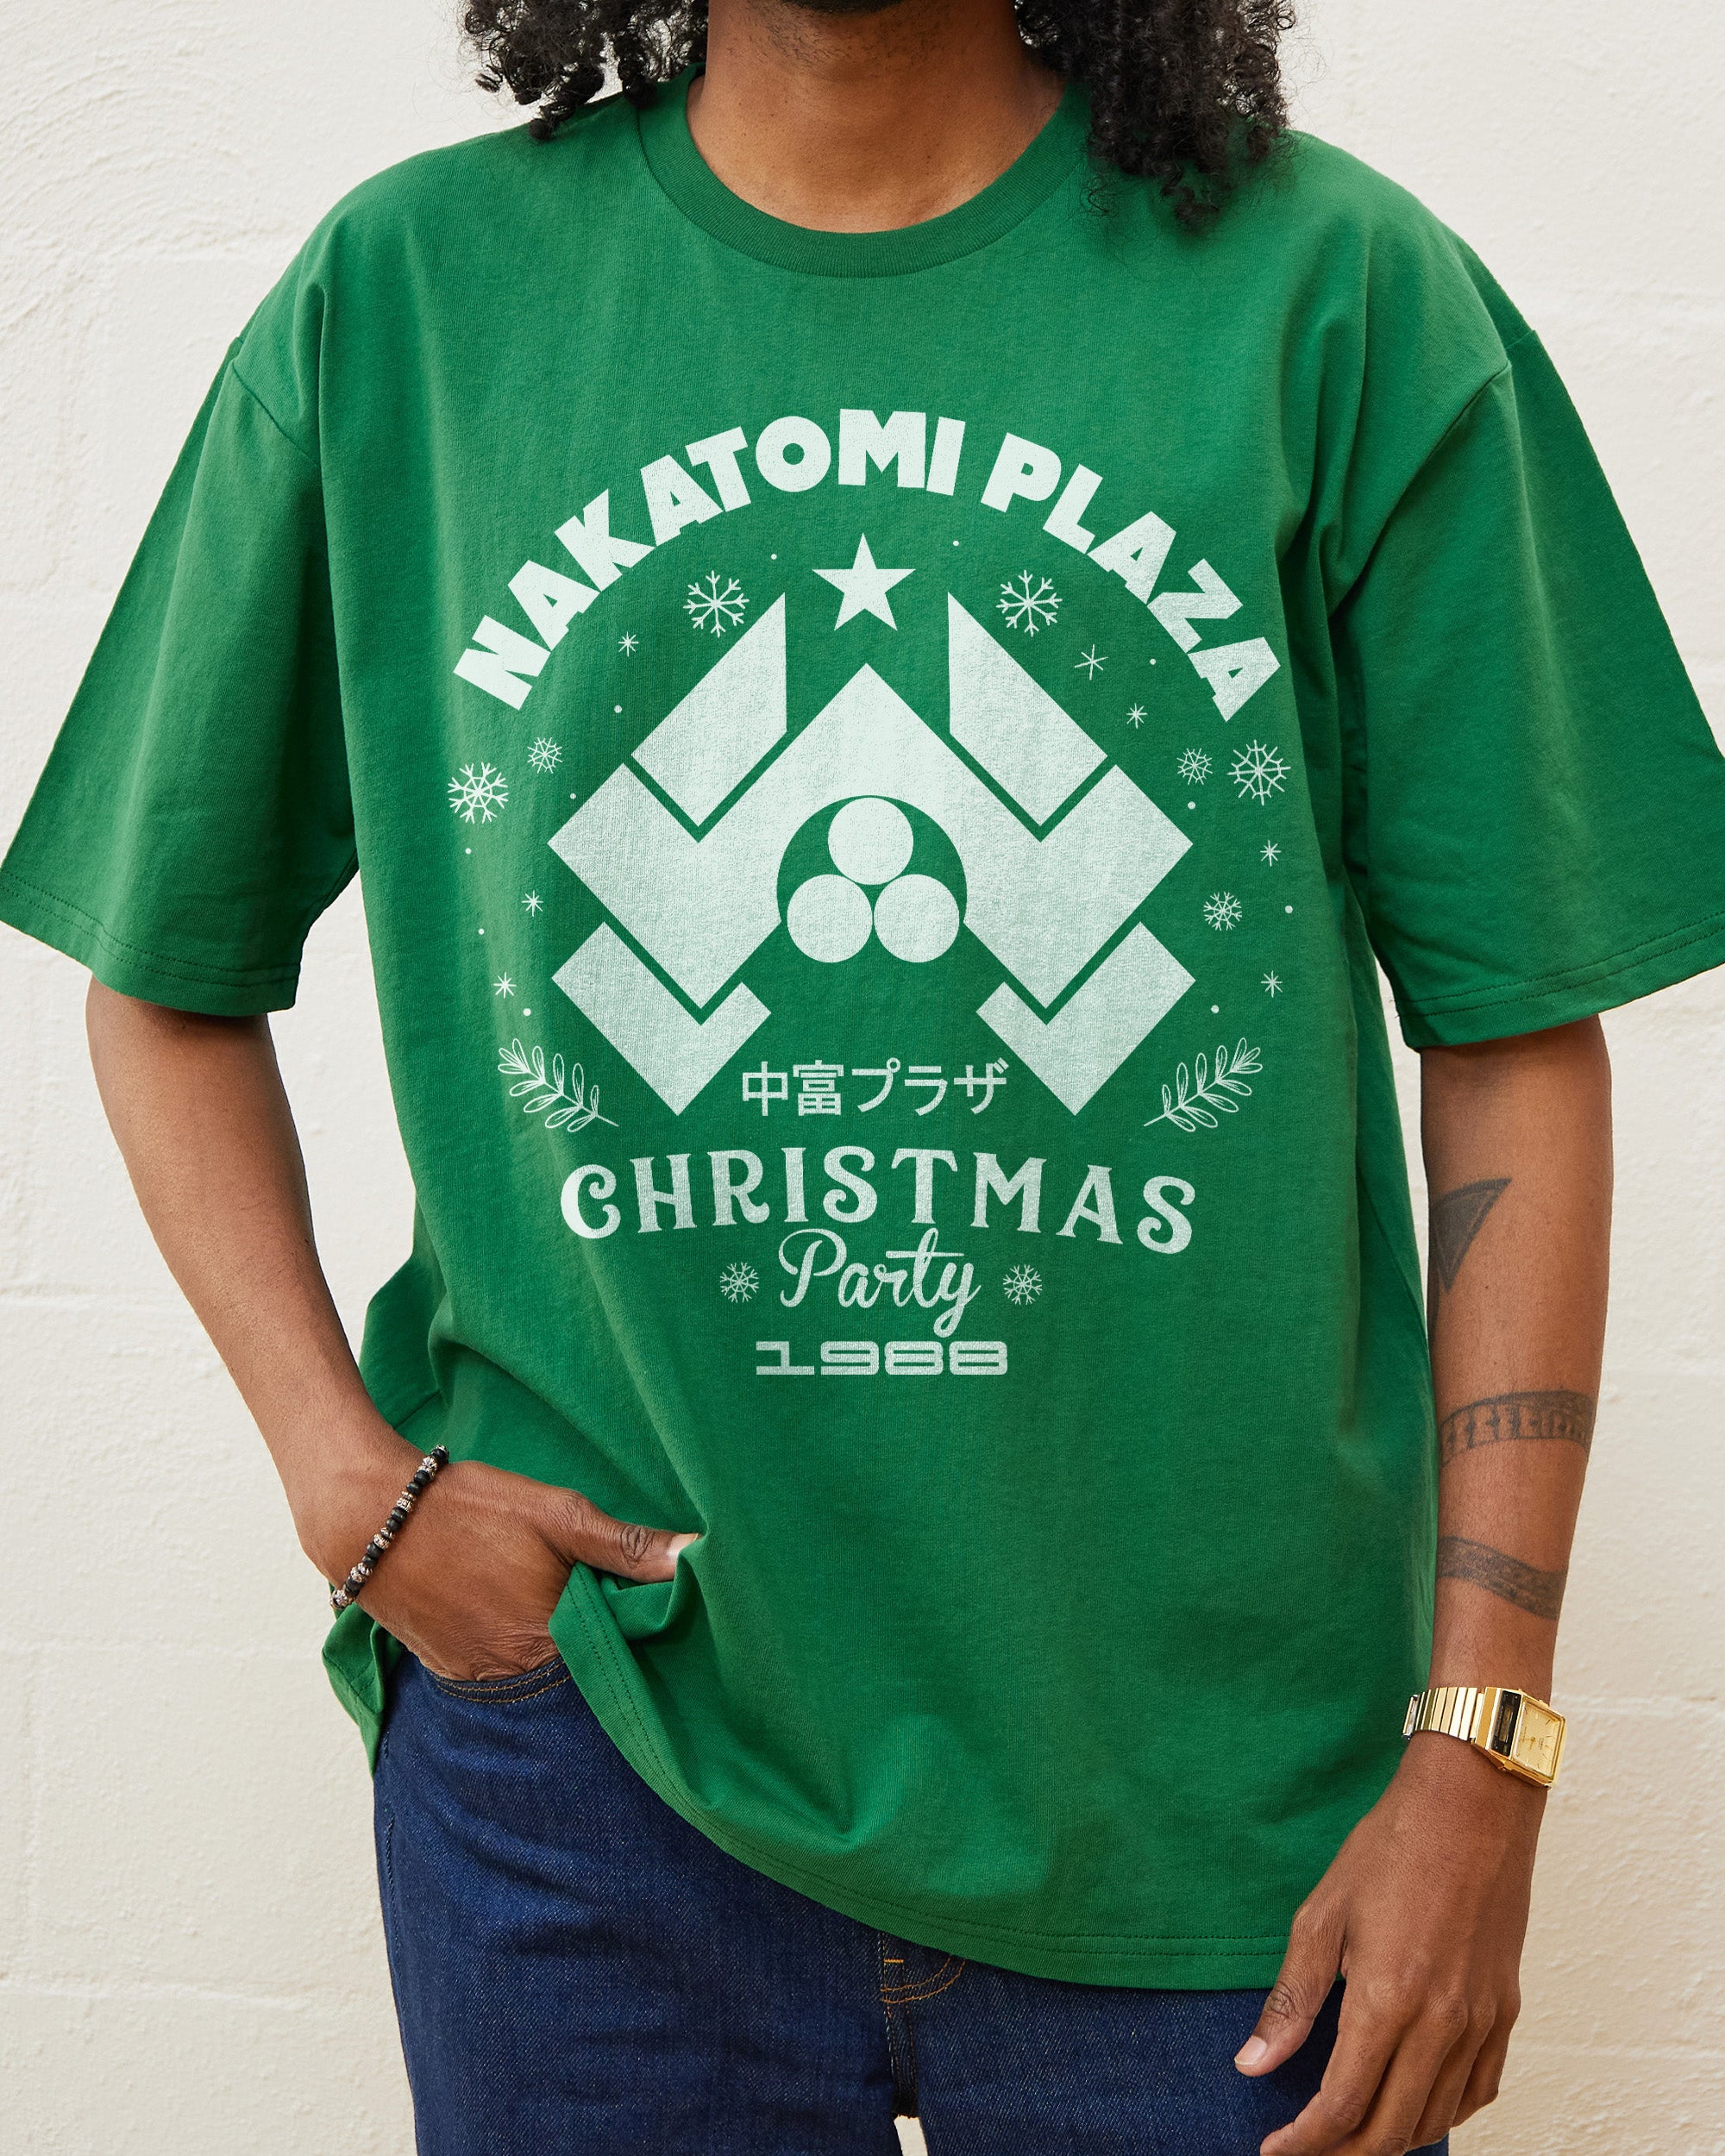 Nakatomi Christmas Party 1988 T-Shirt Australia Online